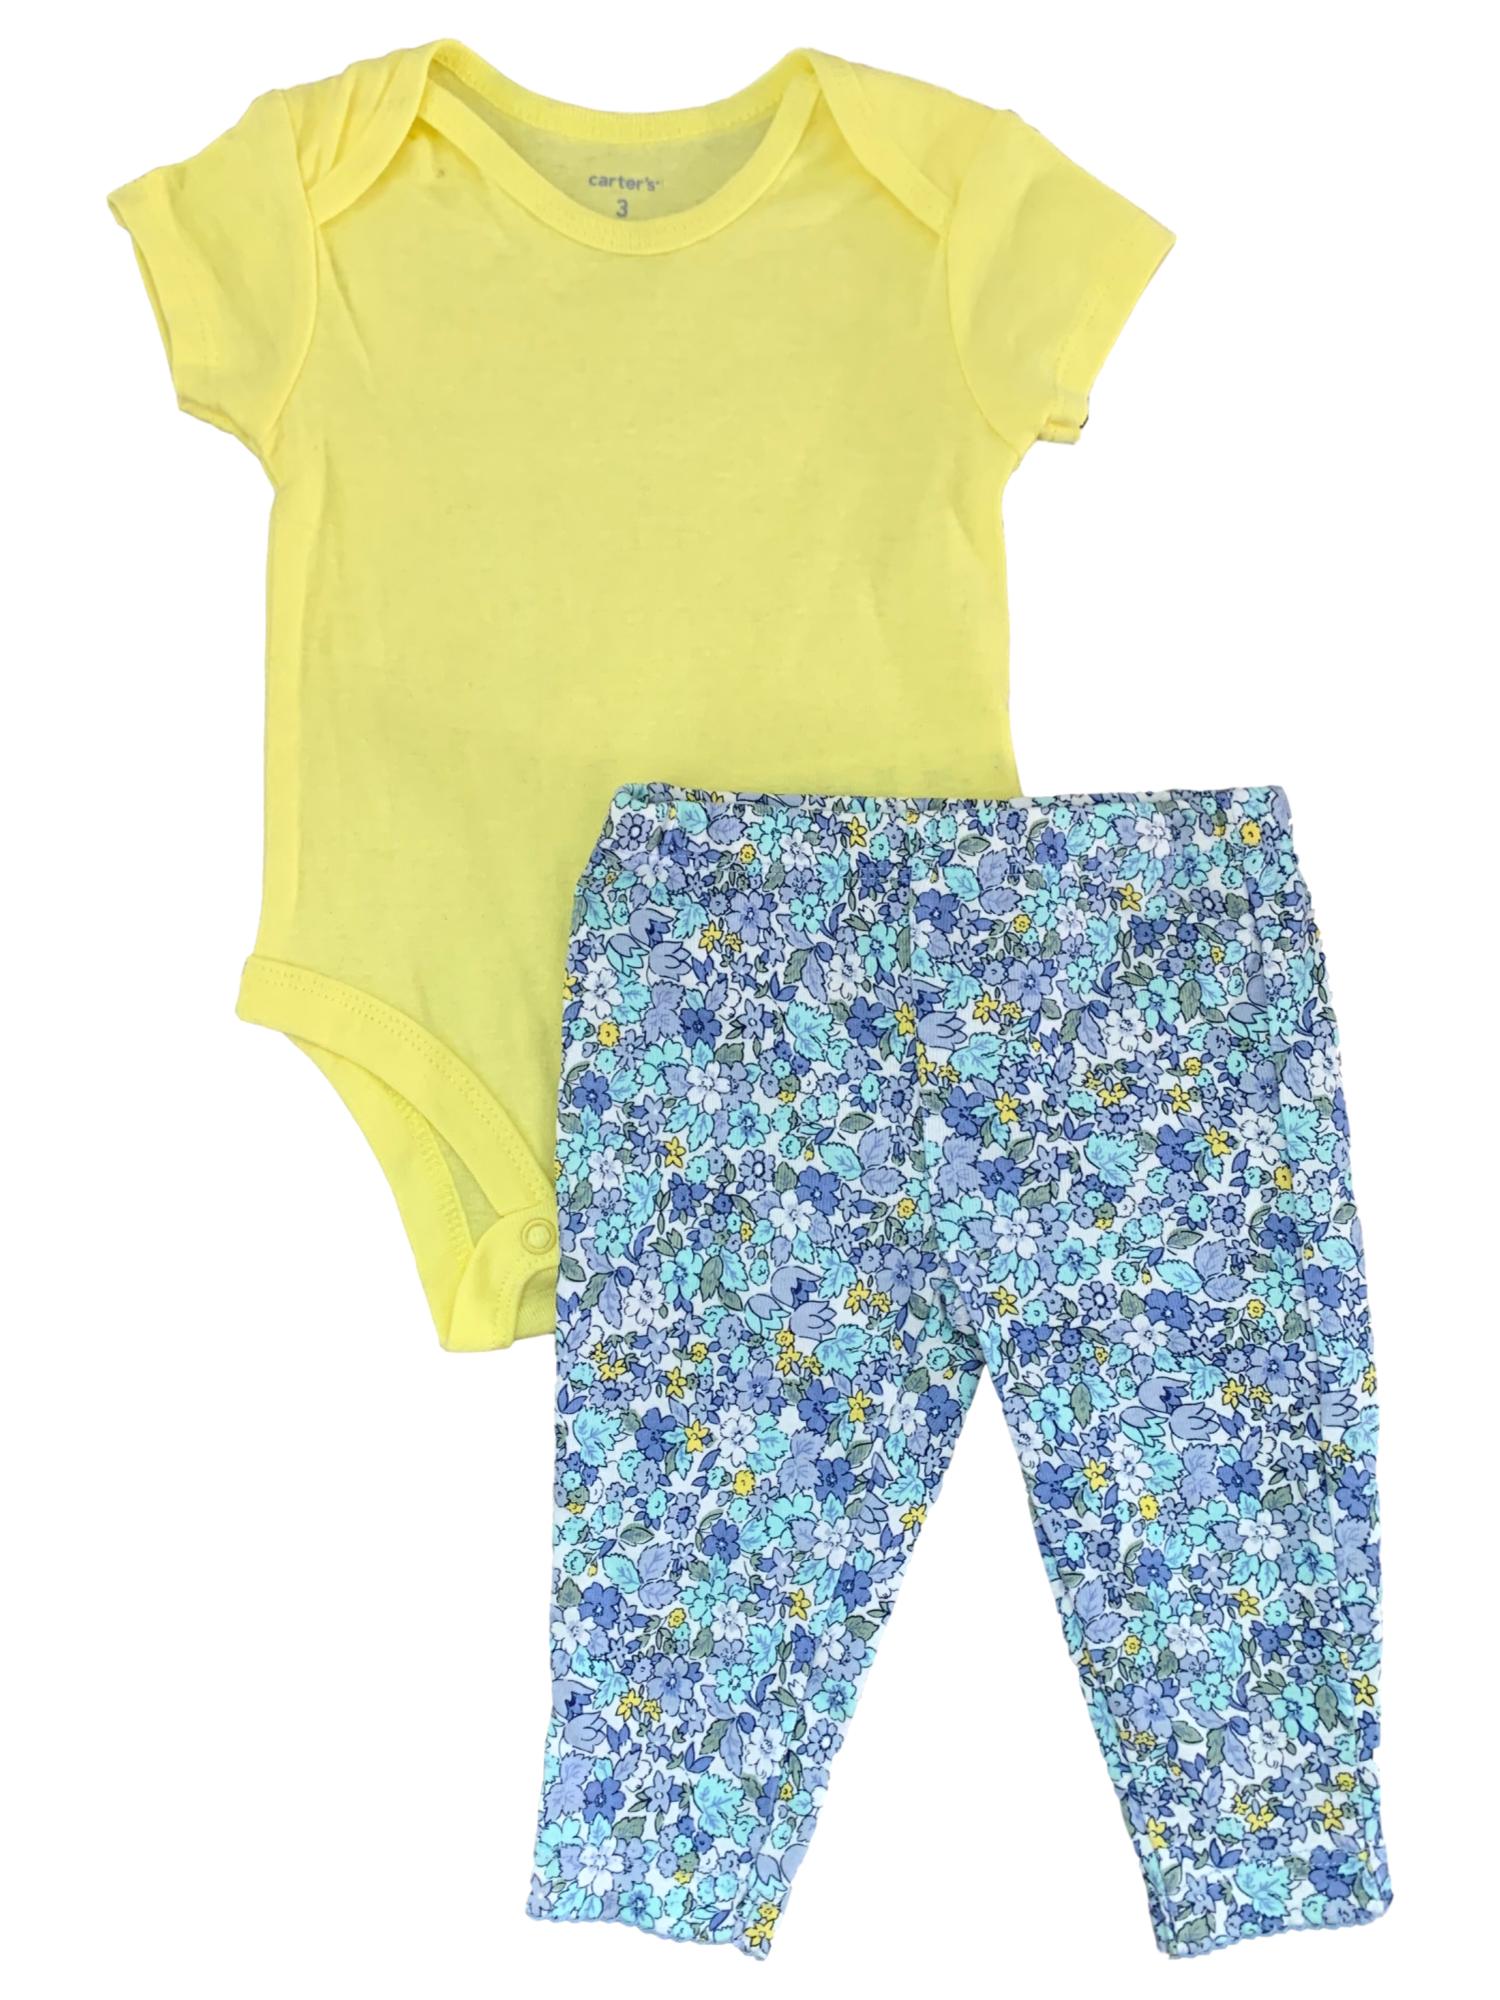 Carter's Carters Infant & Baby Girls Yellow Bodysuit Creeper & Blue Floral Leggings 3M